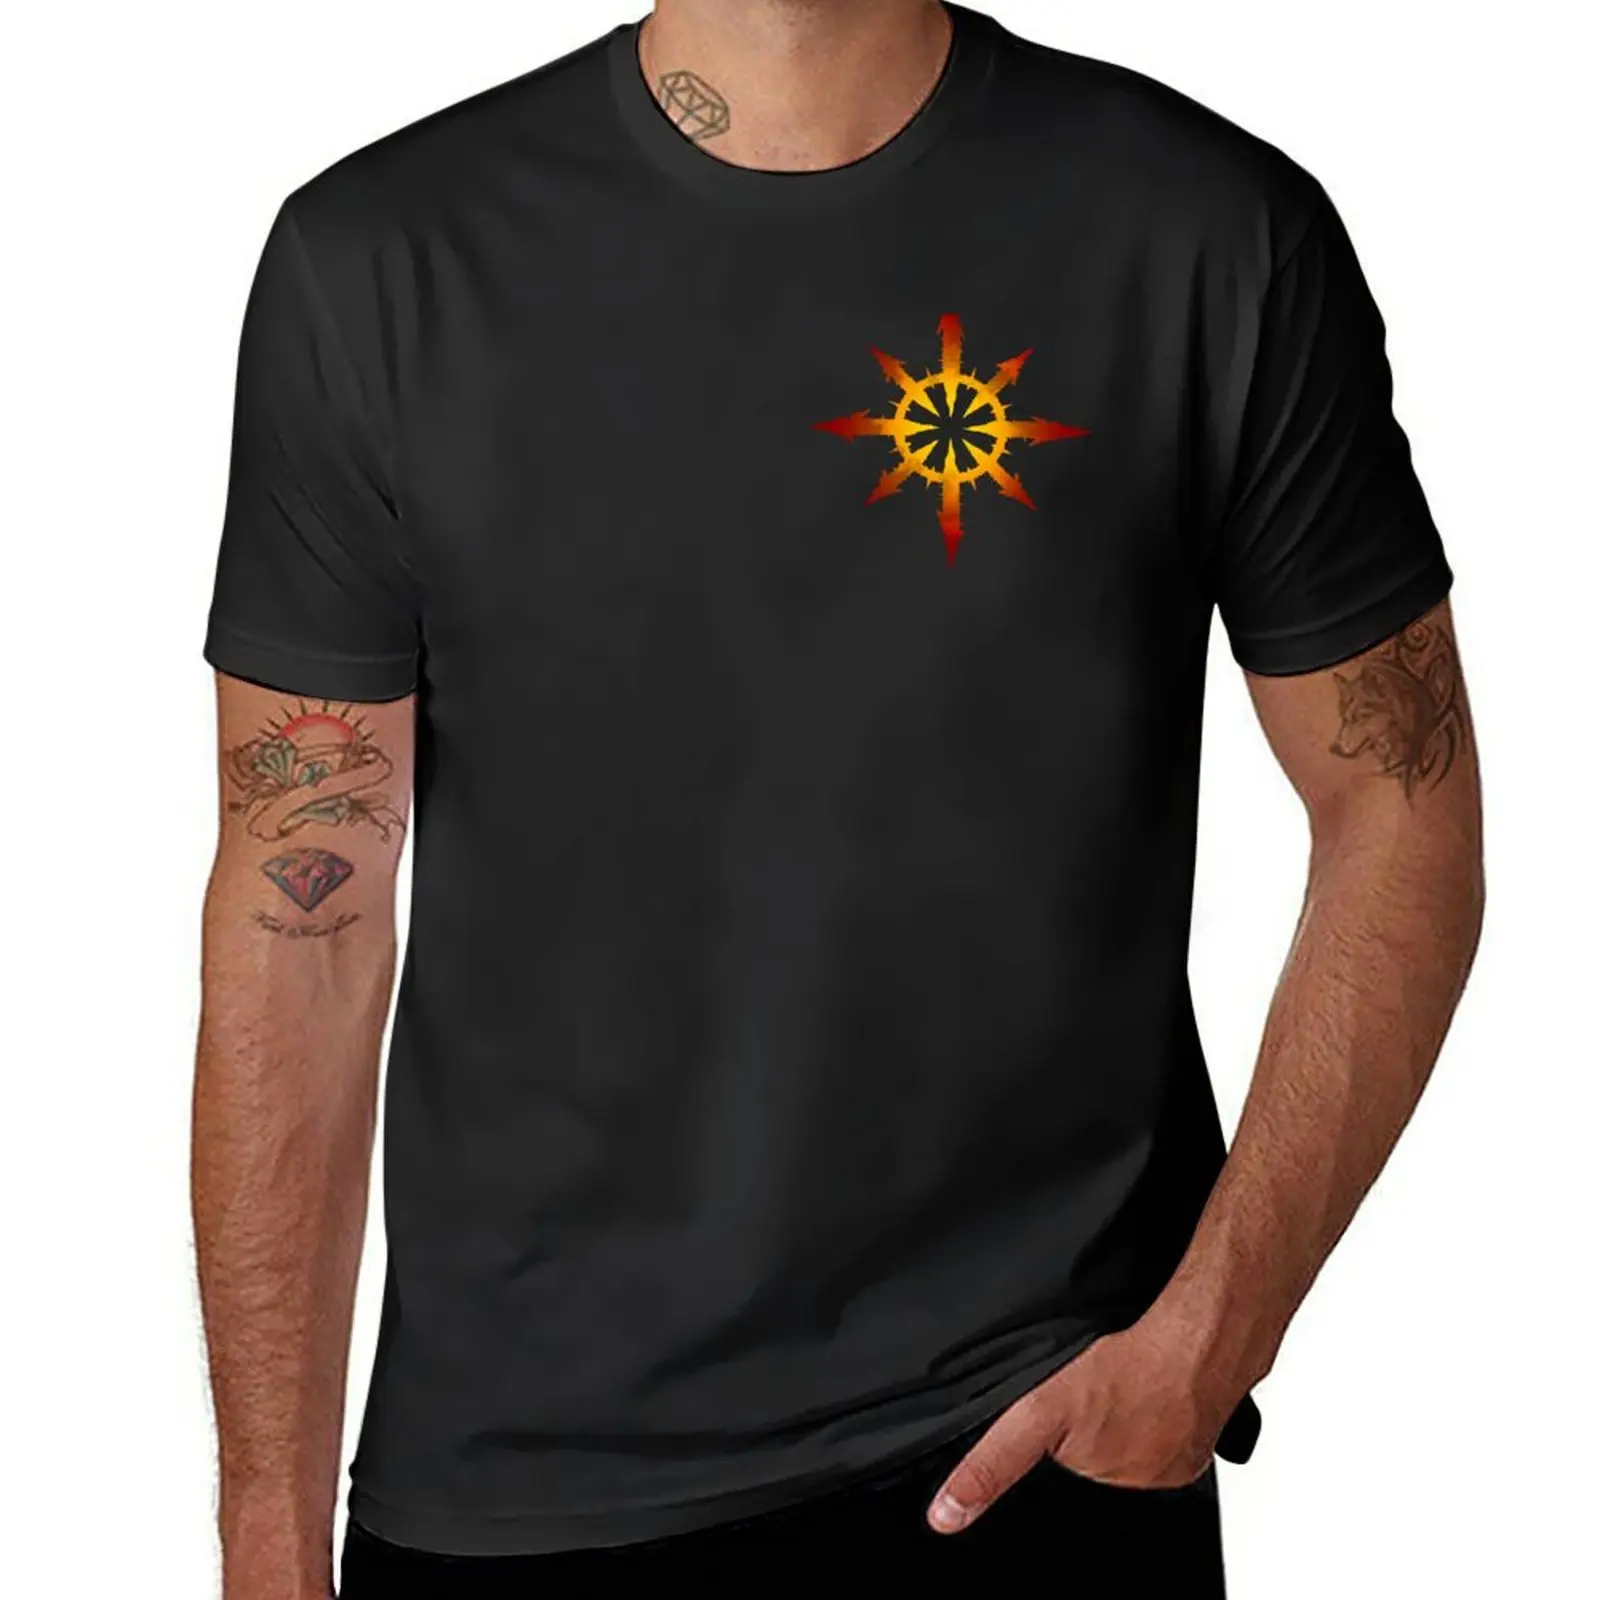 

New Chaos Burning T-Shirt man clothes T-shirt short t shirts for men cotton